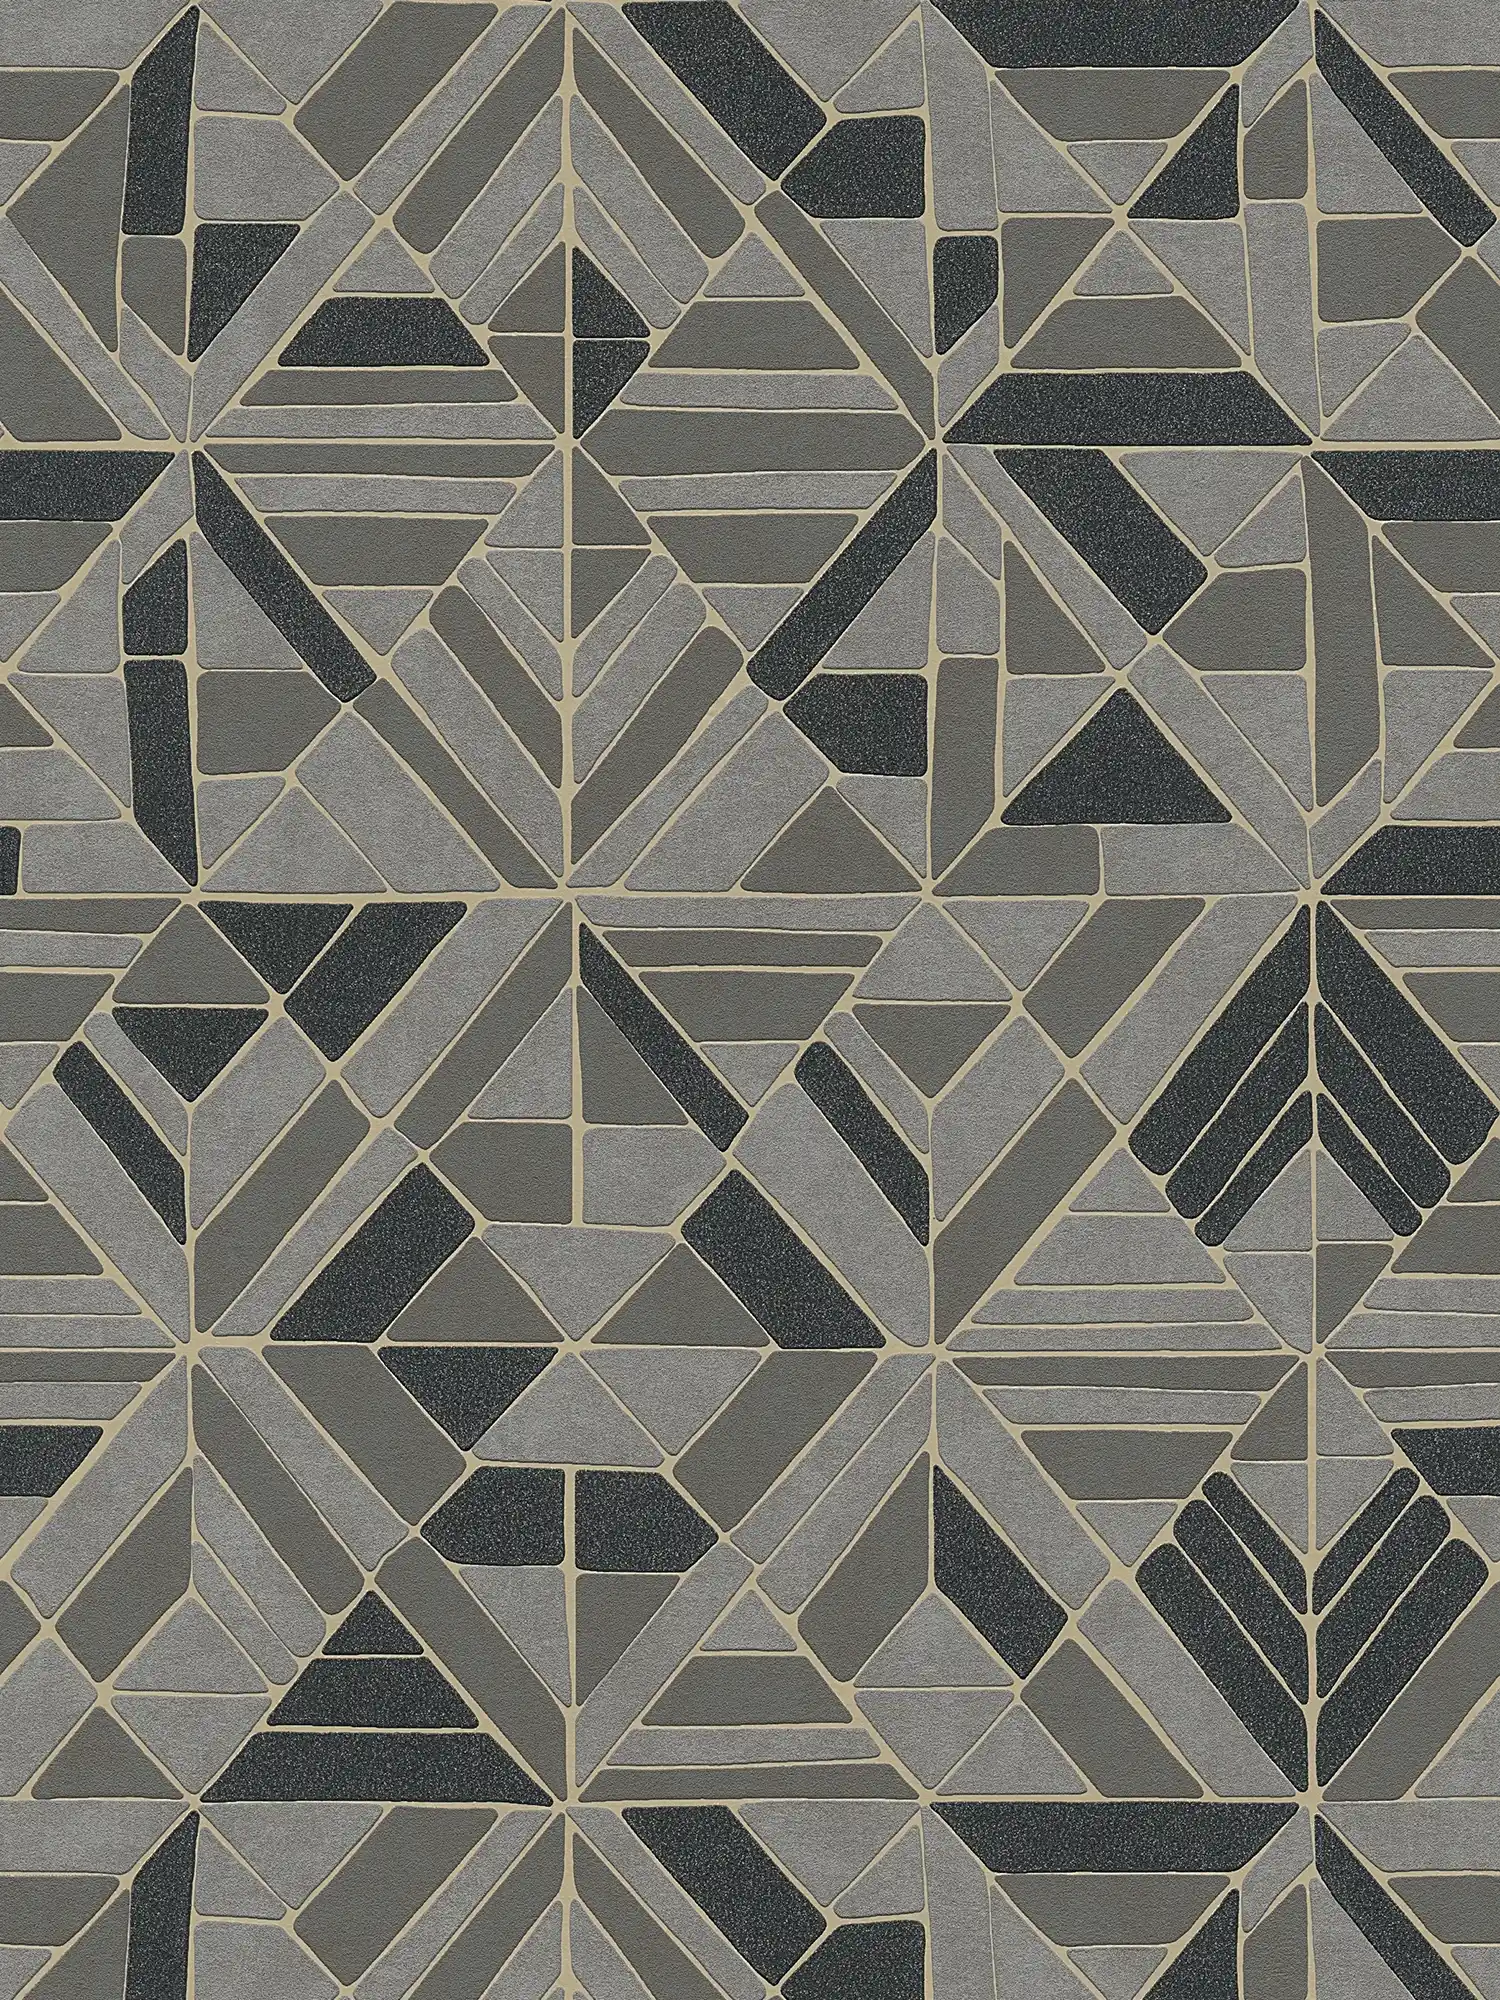 Wallpaper geometric pattern & metallic accents - brown, black, gold
